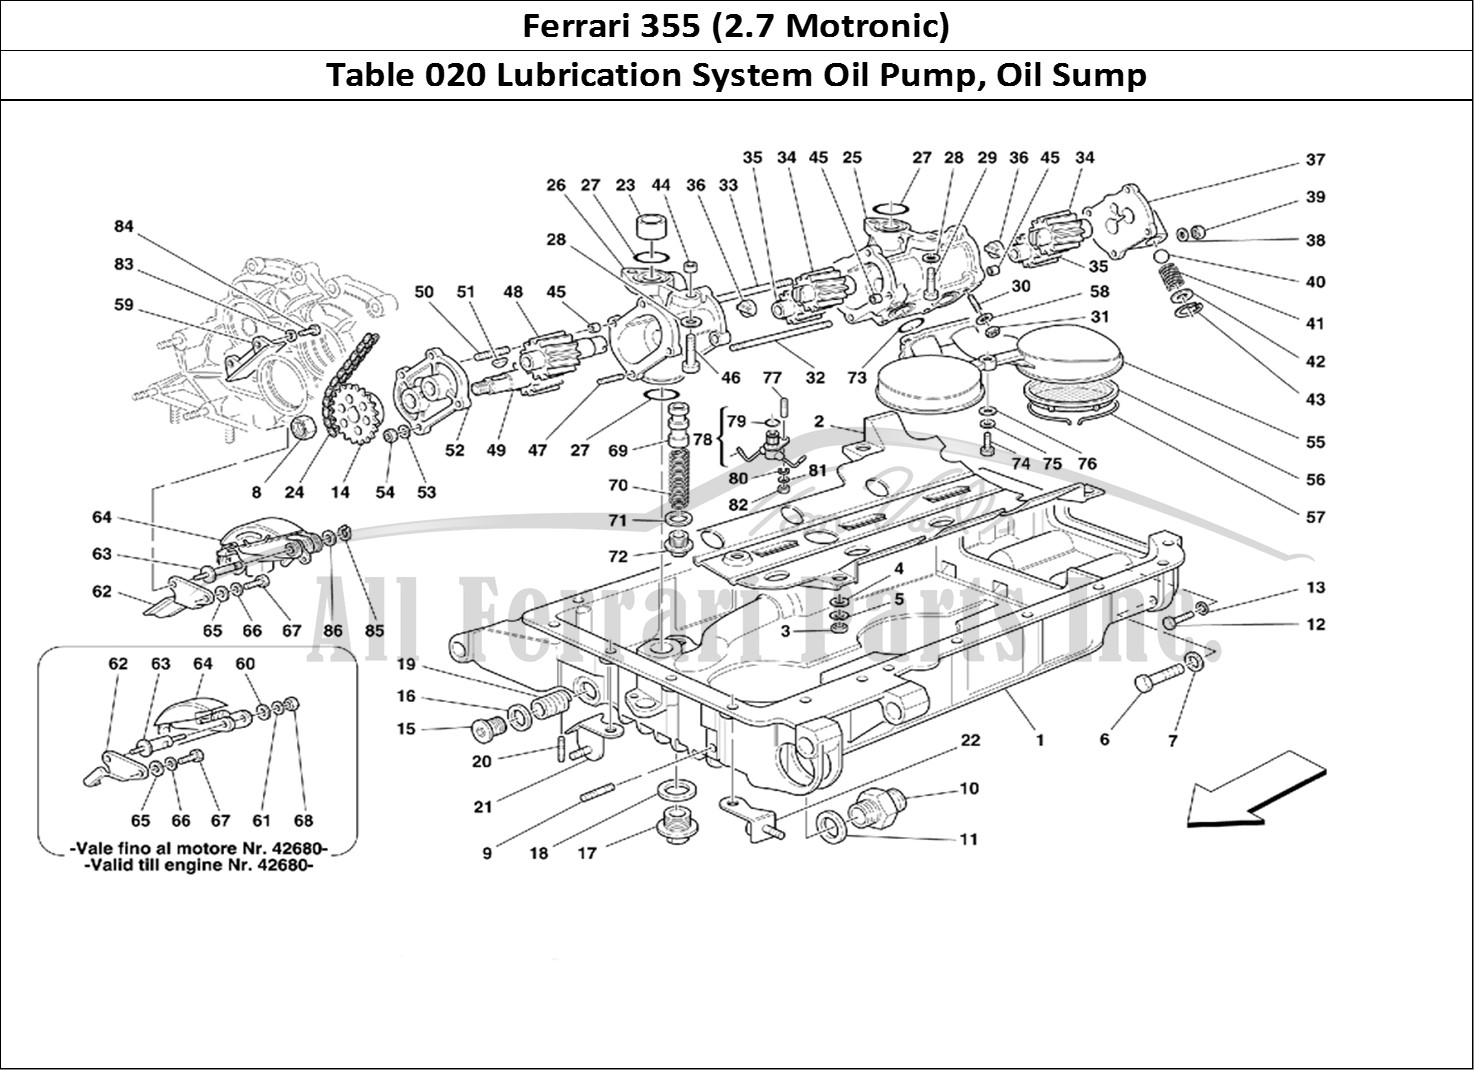 Ferrari Parts Ferrari 355 (2.7 Motronic) Page 020 Pumps and Oil Sump